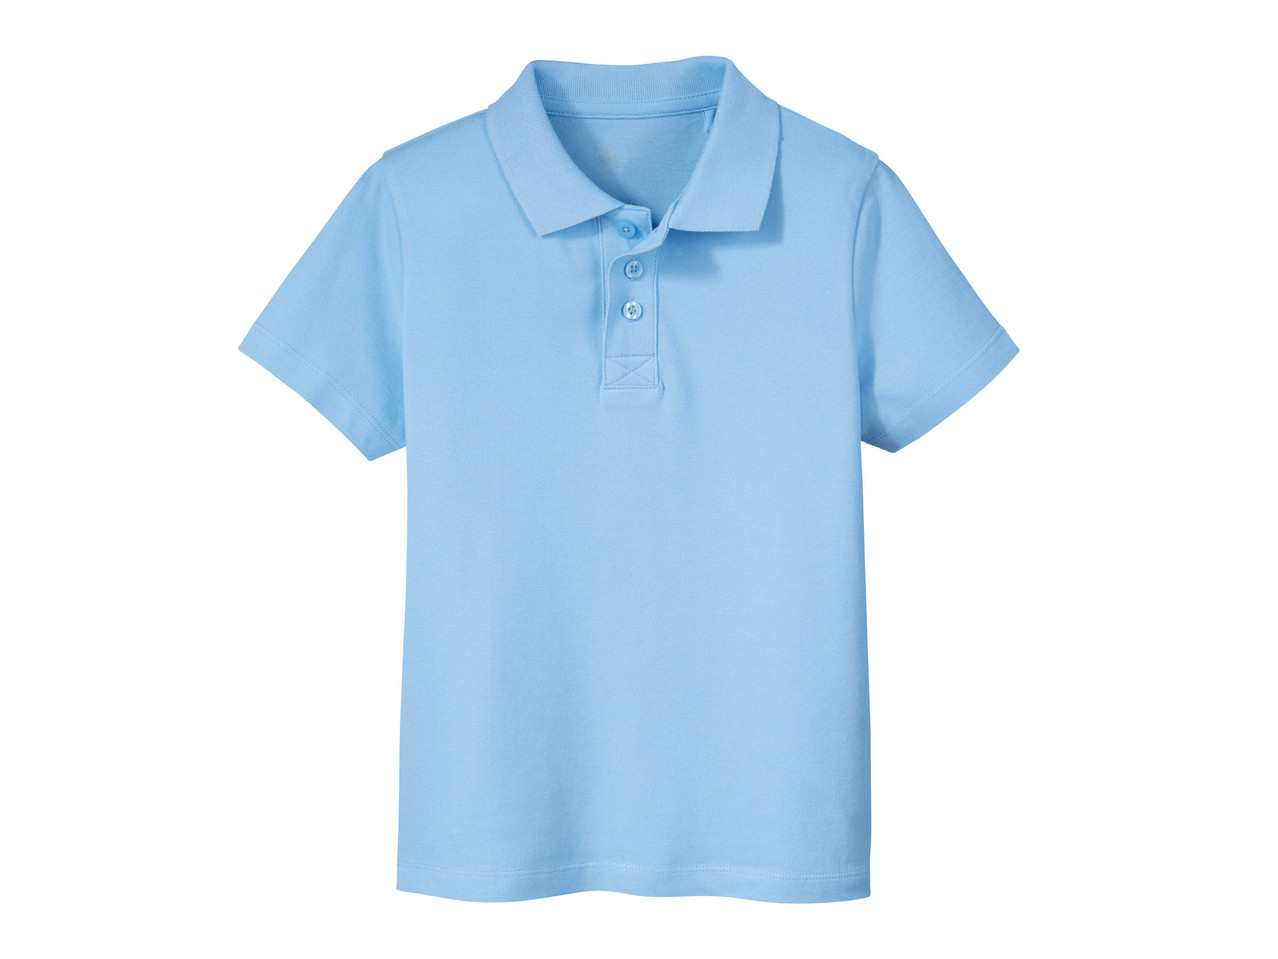 Kids' School Polo Shirts